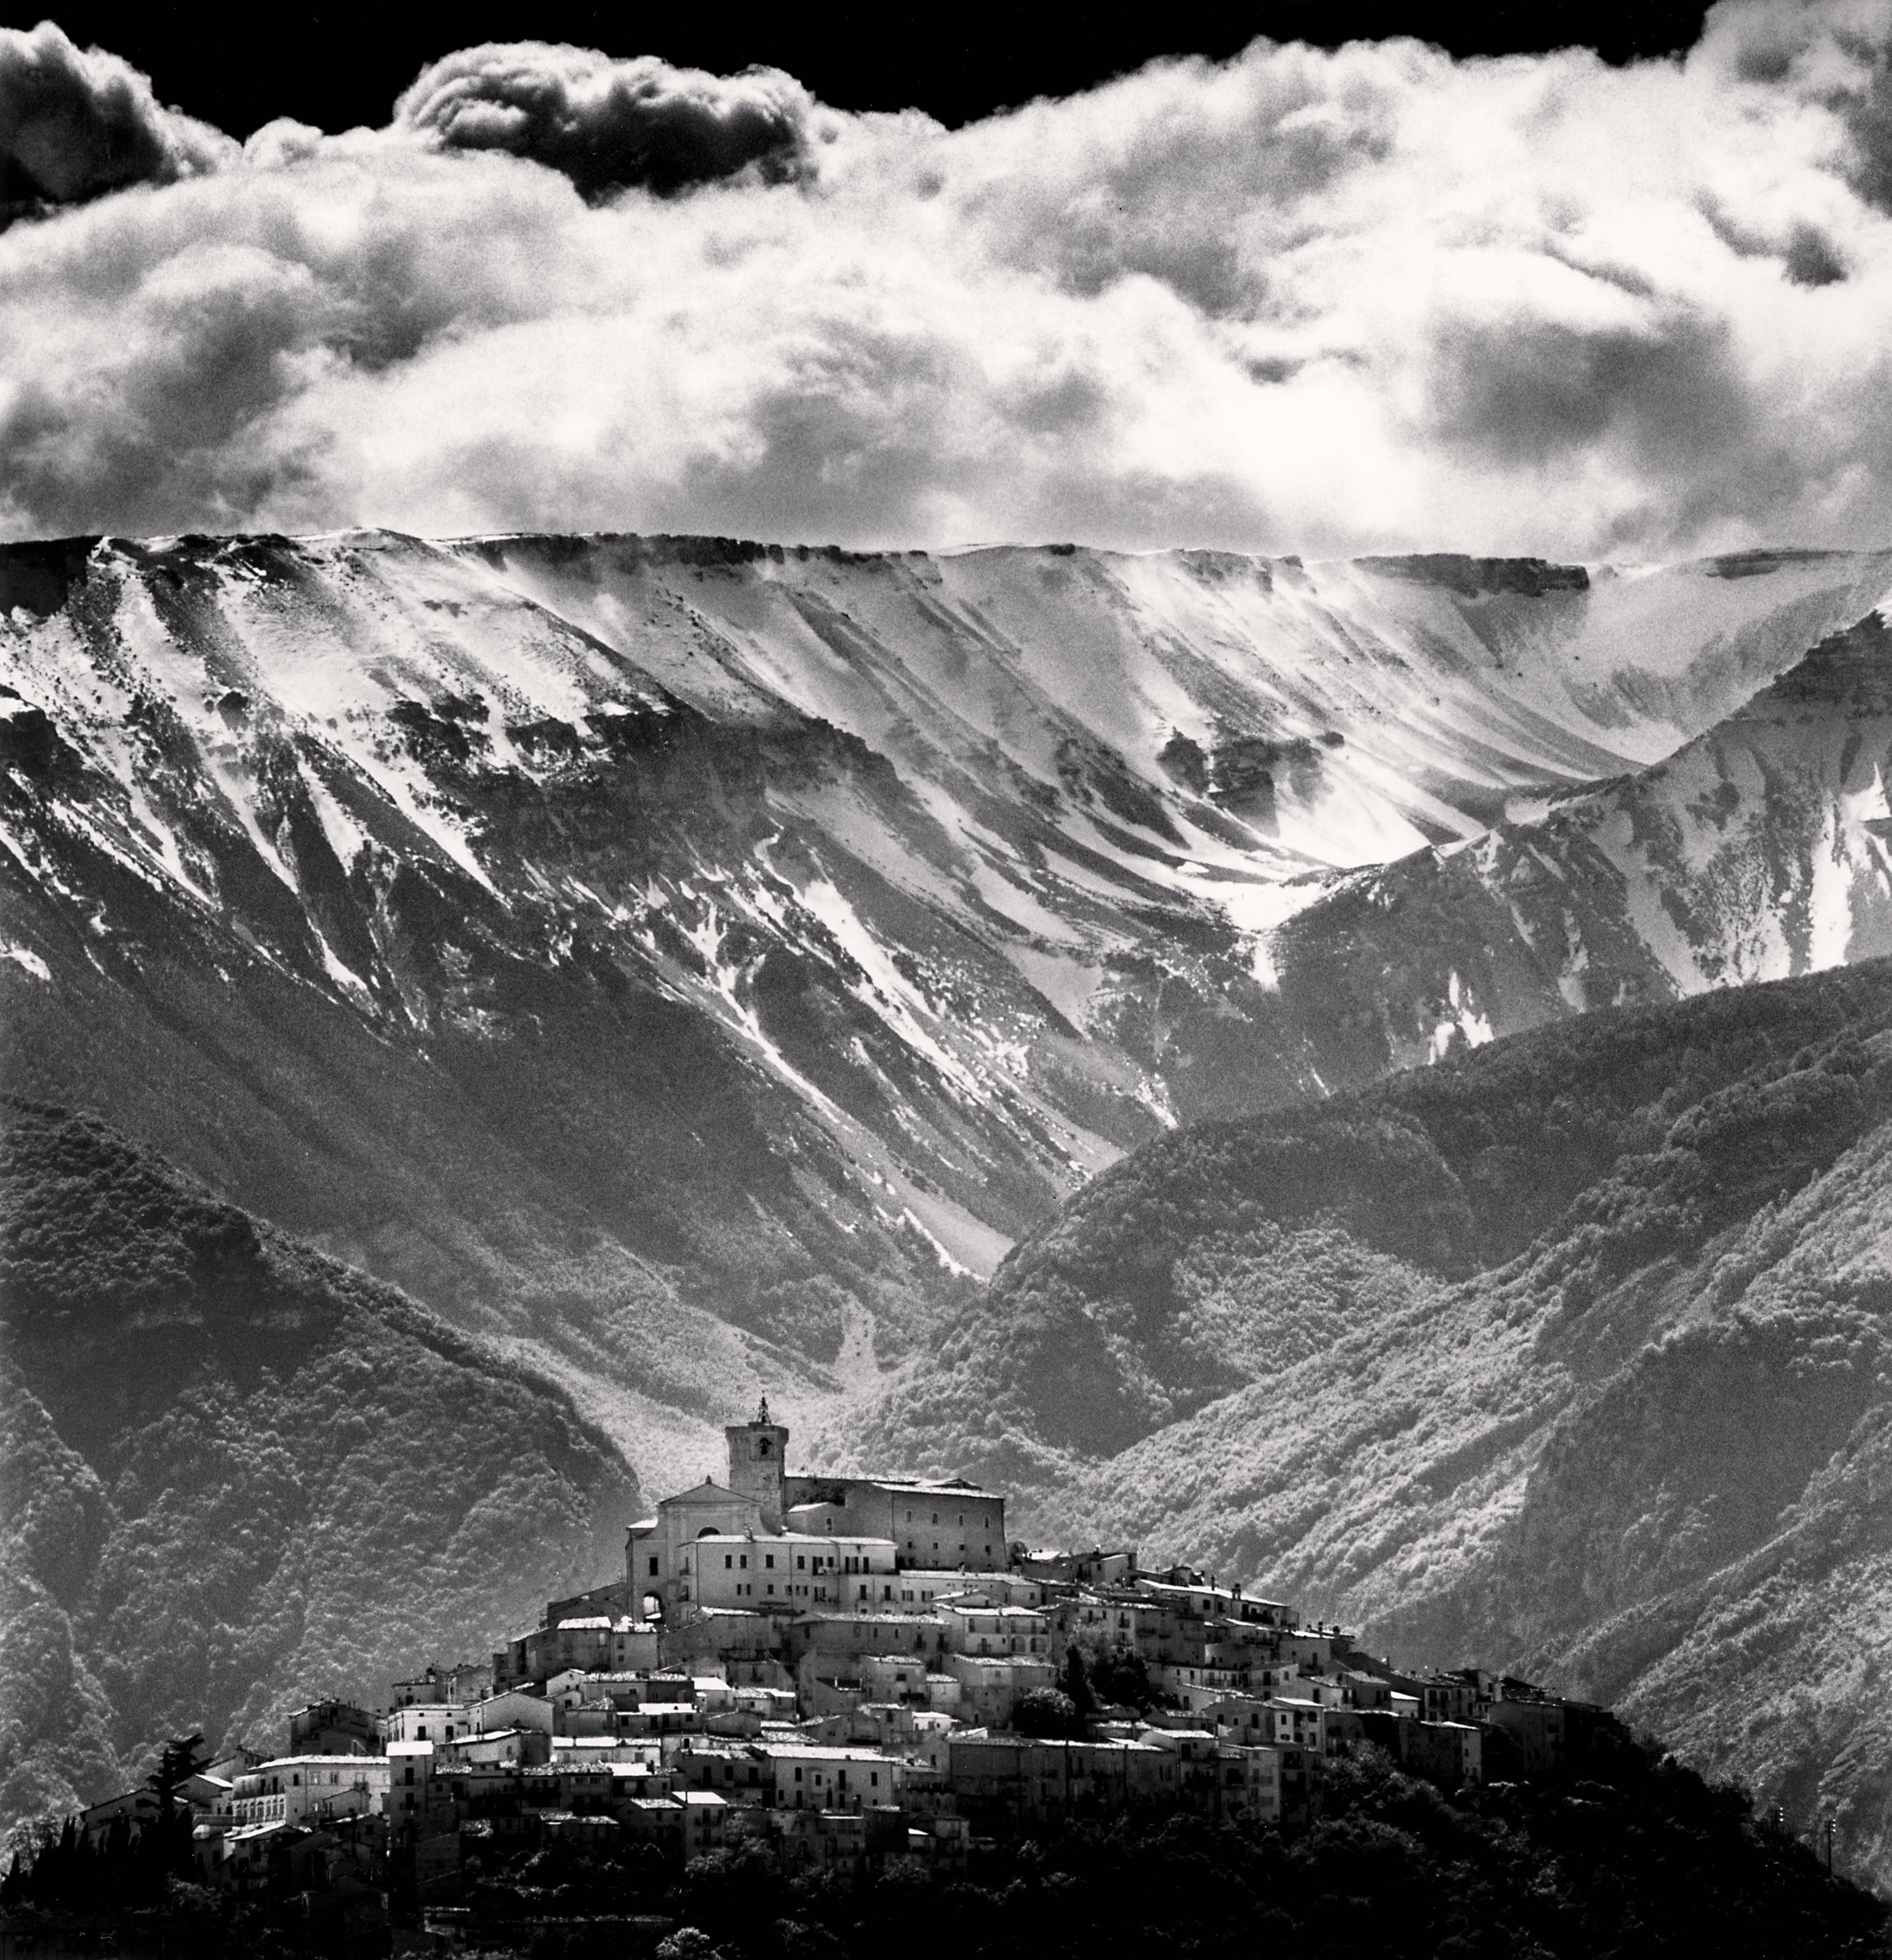 Gathering Clouds, Casoli, Abruzzo, Italy, 2016 - Michael Kenna (Black and White)